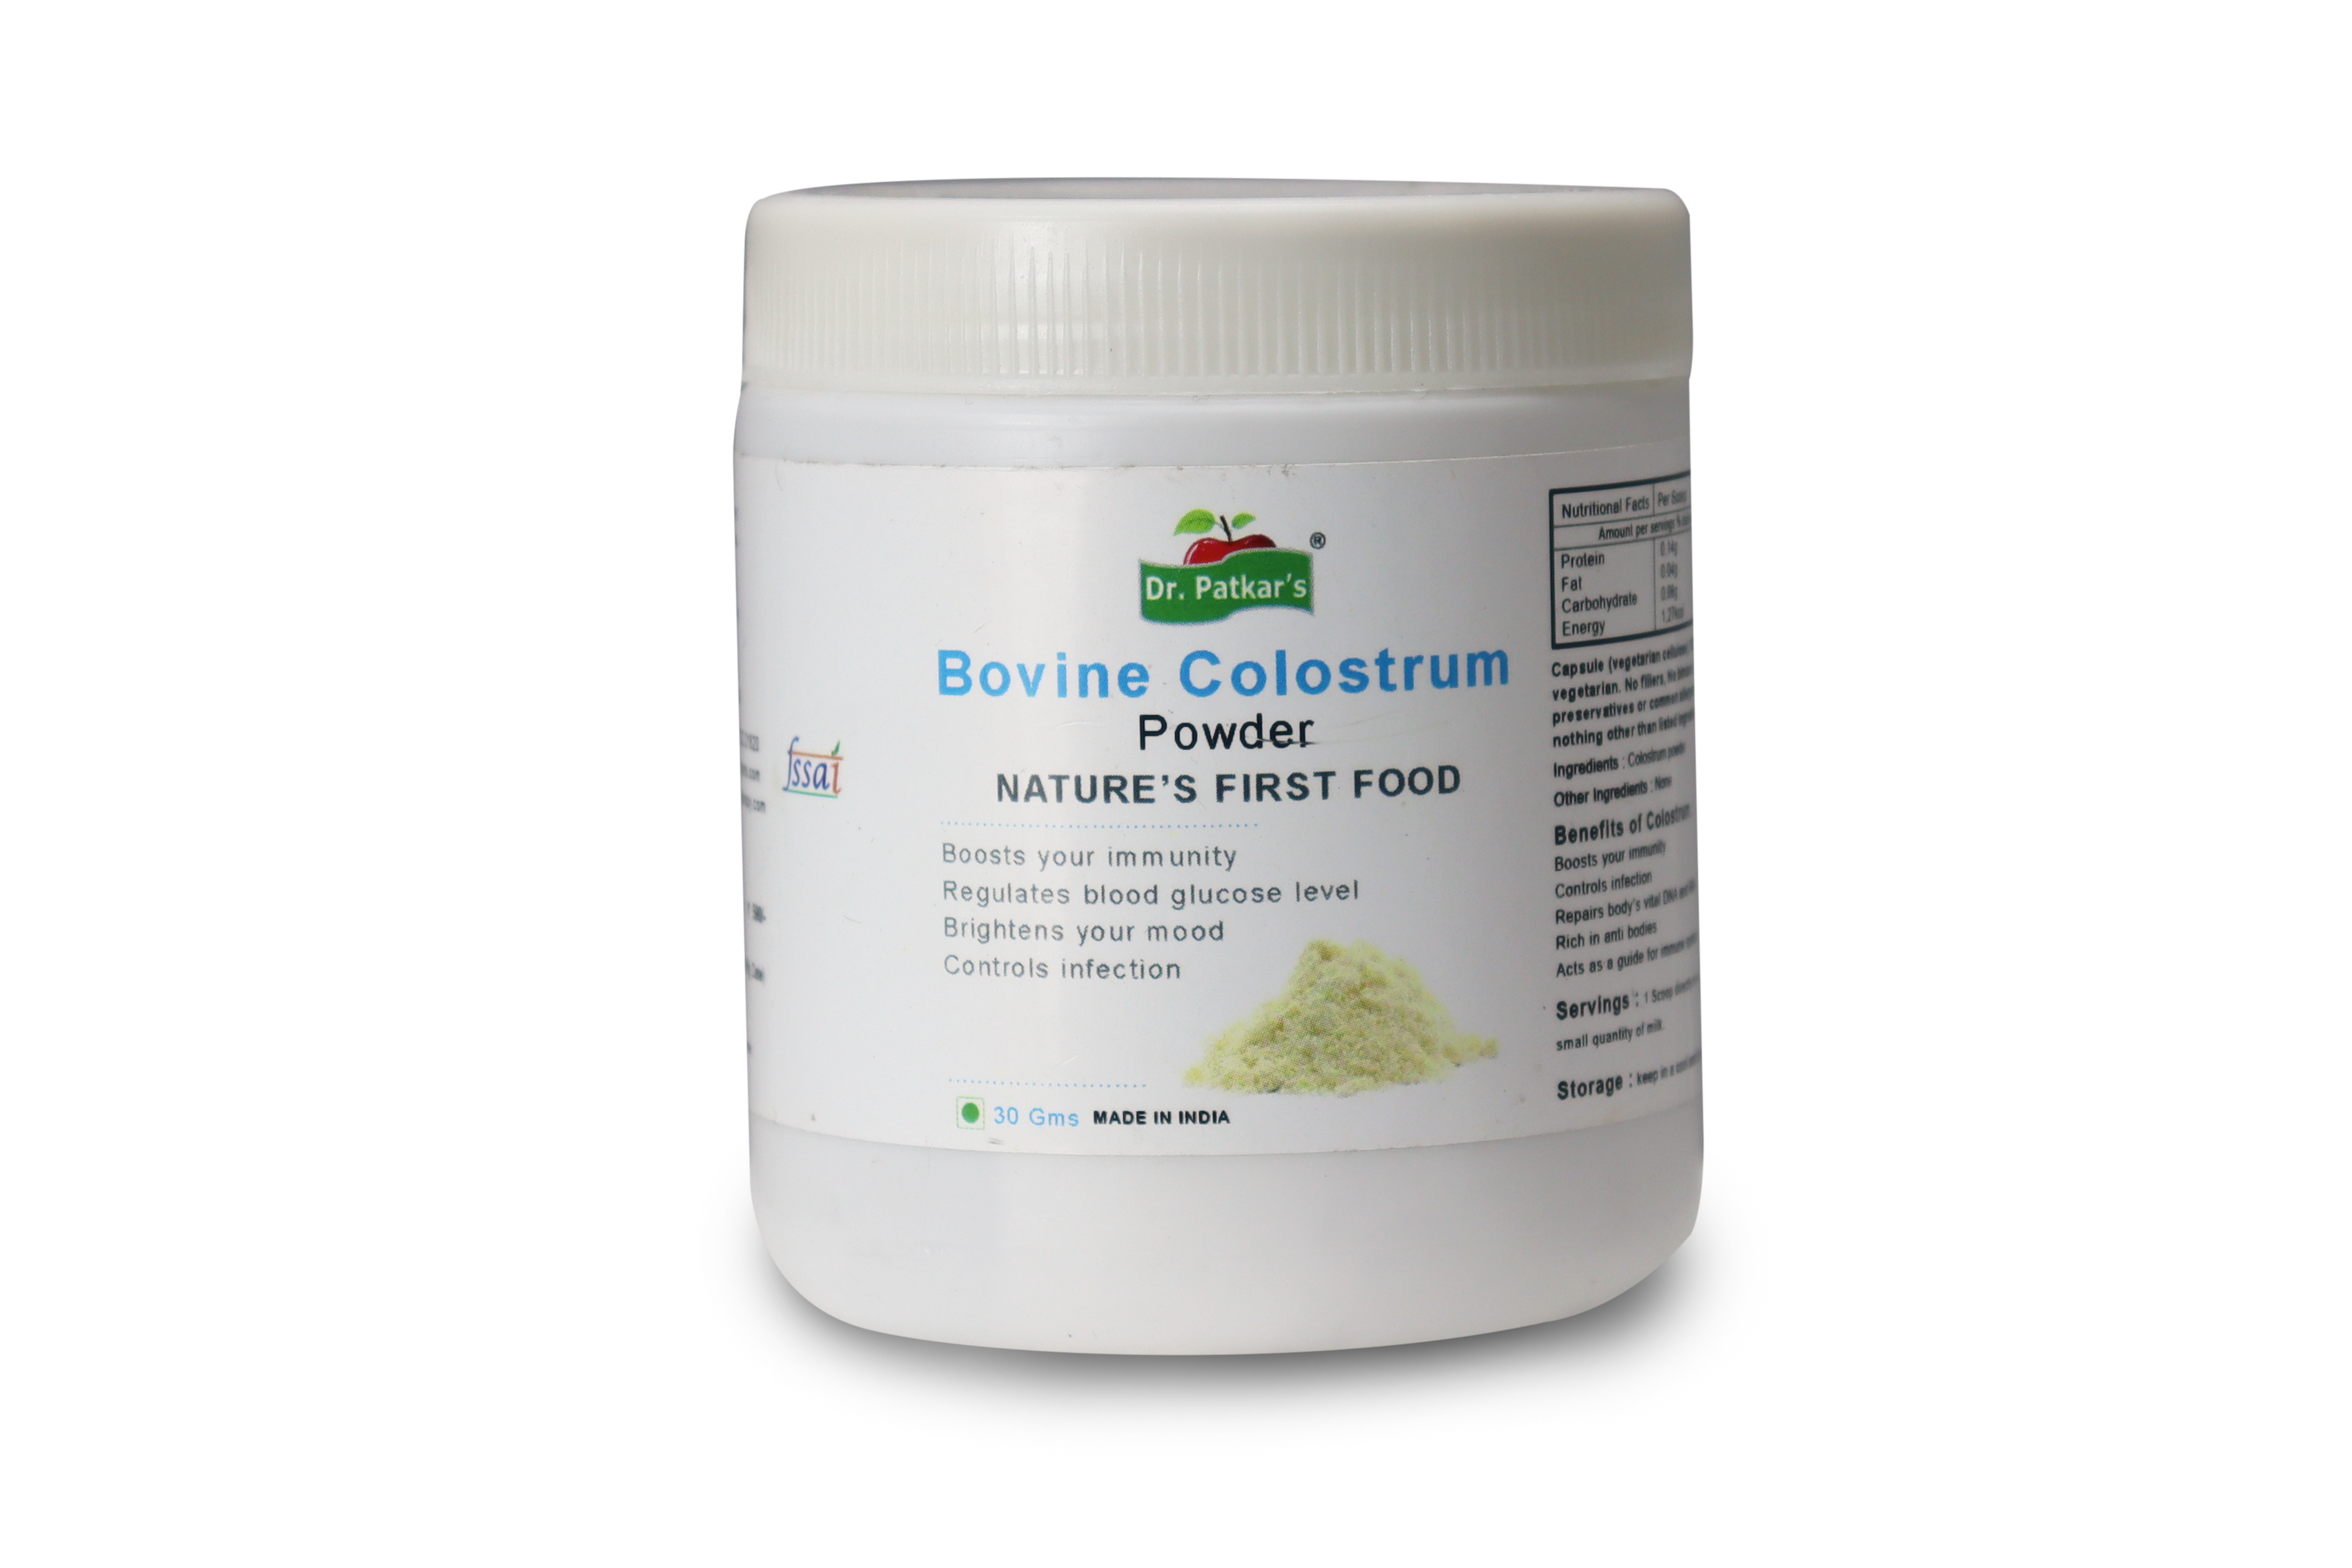 Buy Dr. Patkar's Bovine Colostrum Powder at Best Price Online